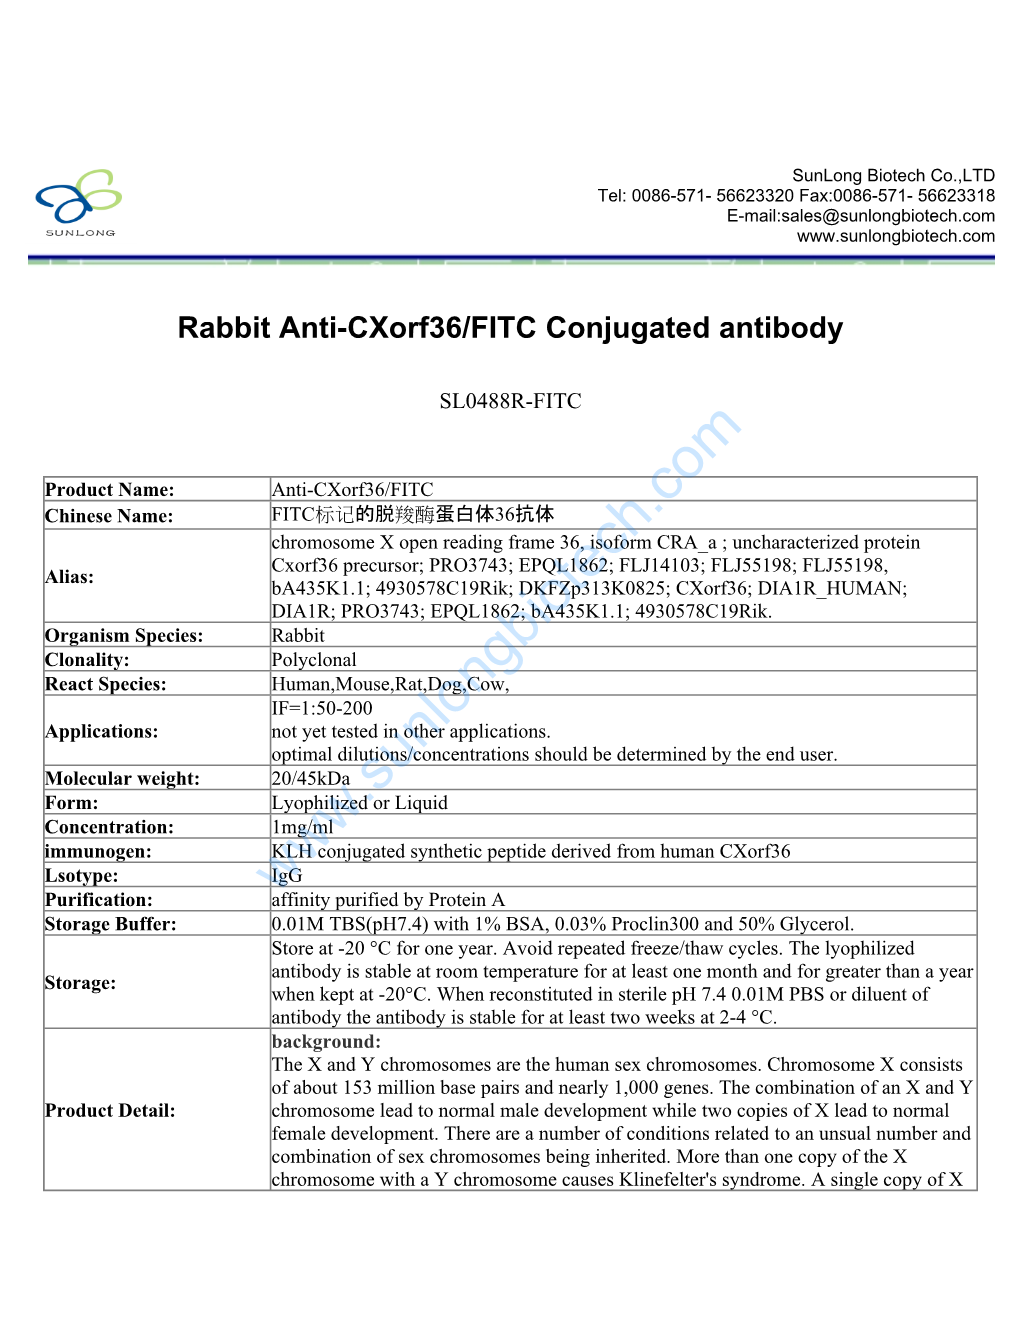 Rabbit Anti-Cxorf36/FITC Conjugated Antibody